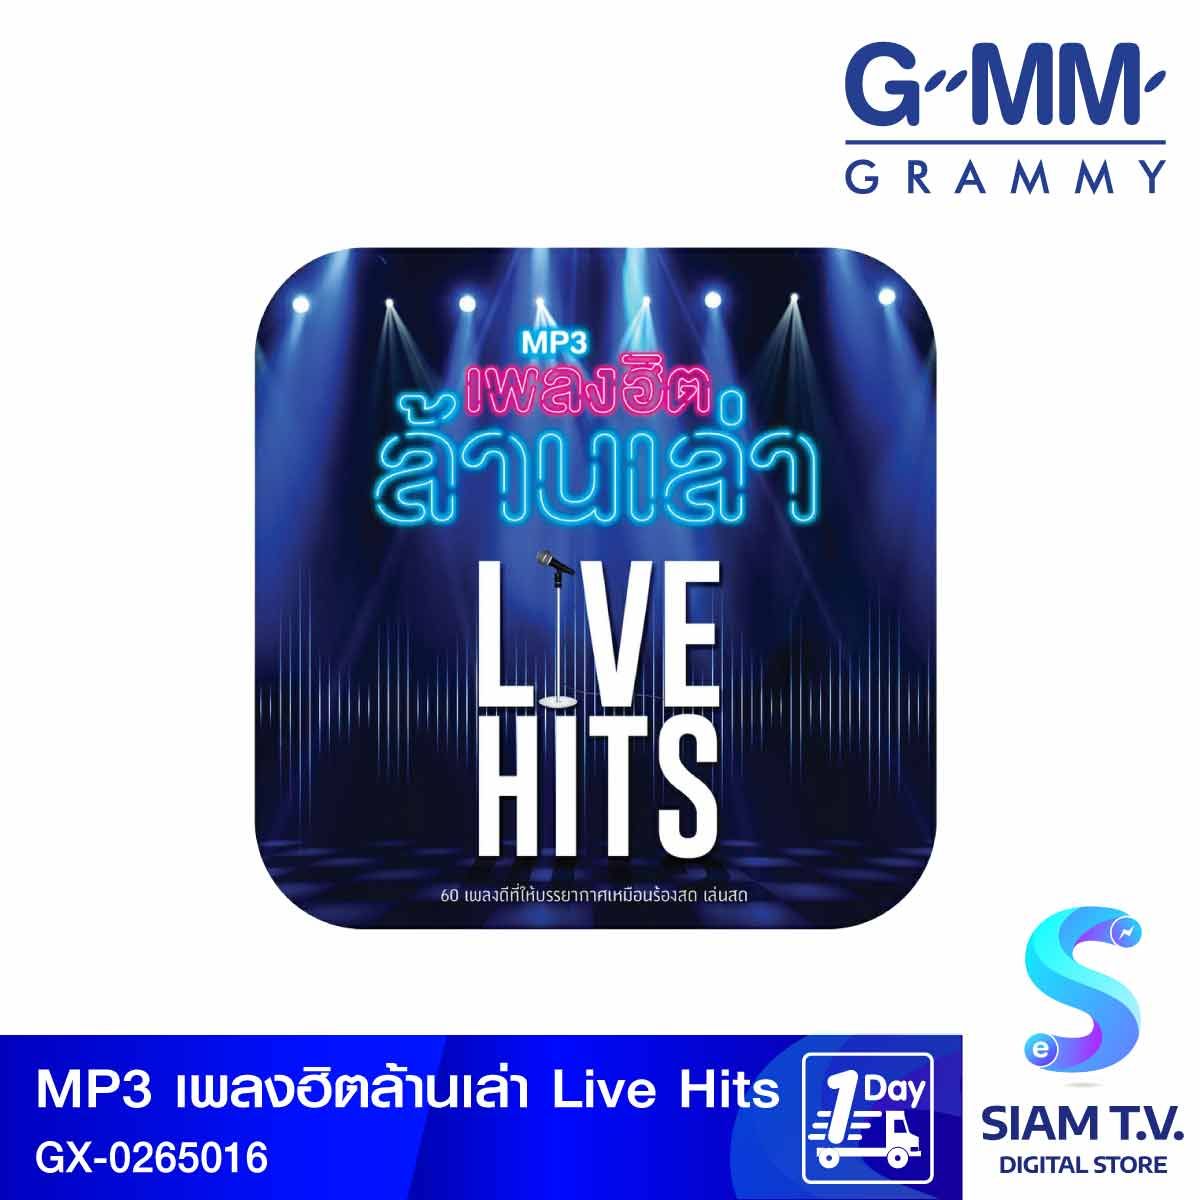 GMM GRAMMY MP3  เพลงฮิตล้านเล่าLive Hits Branded GX-0265016